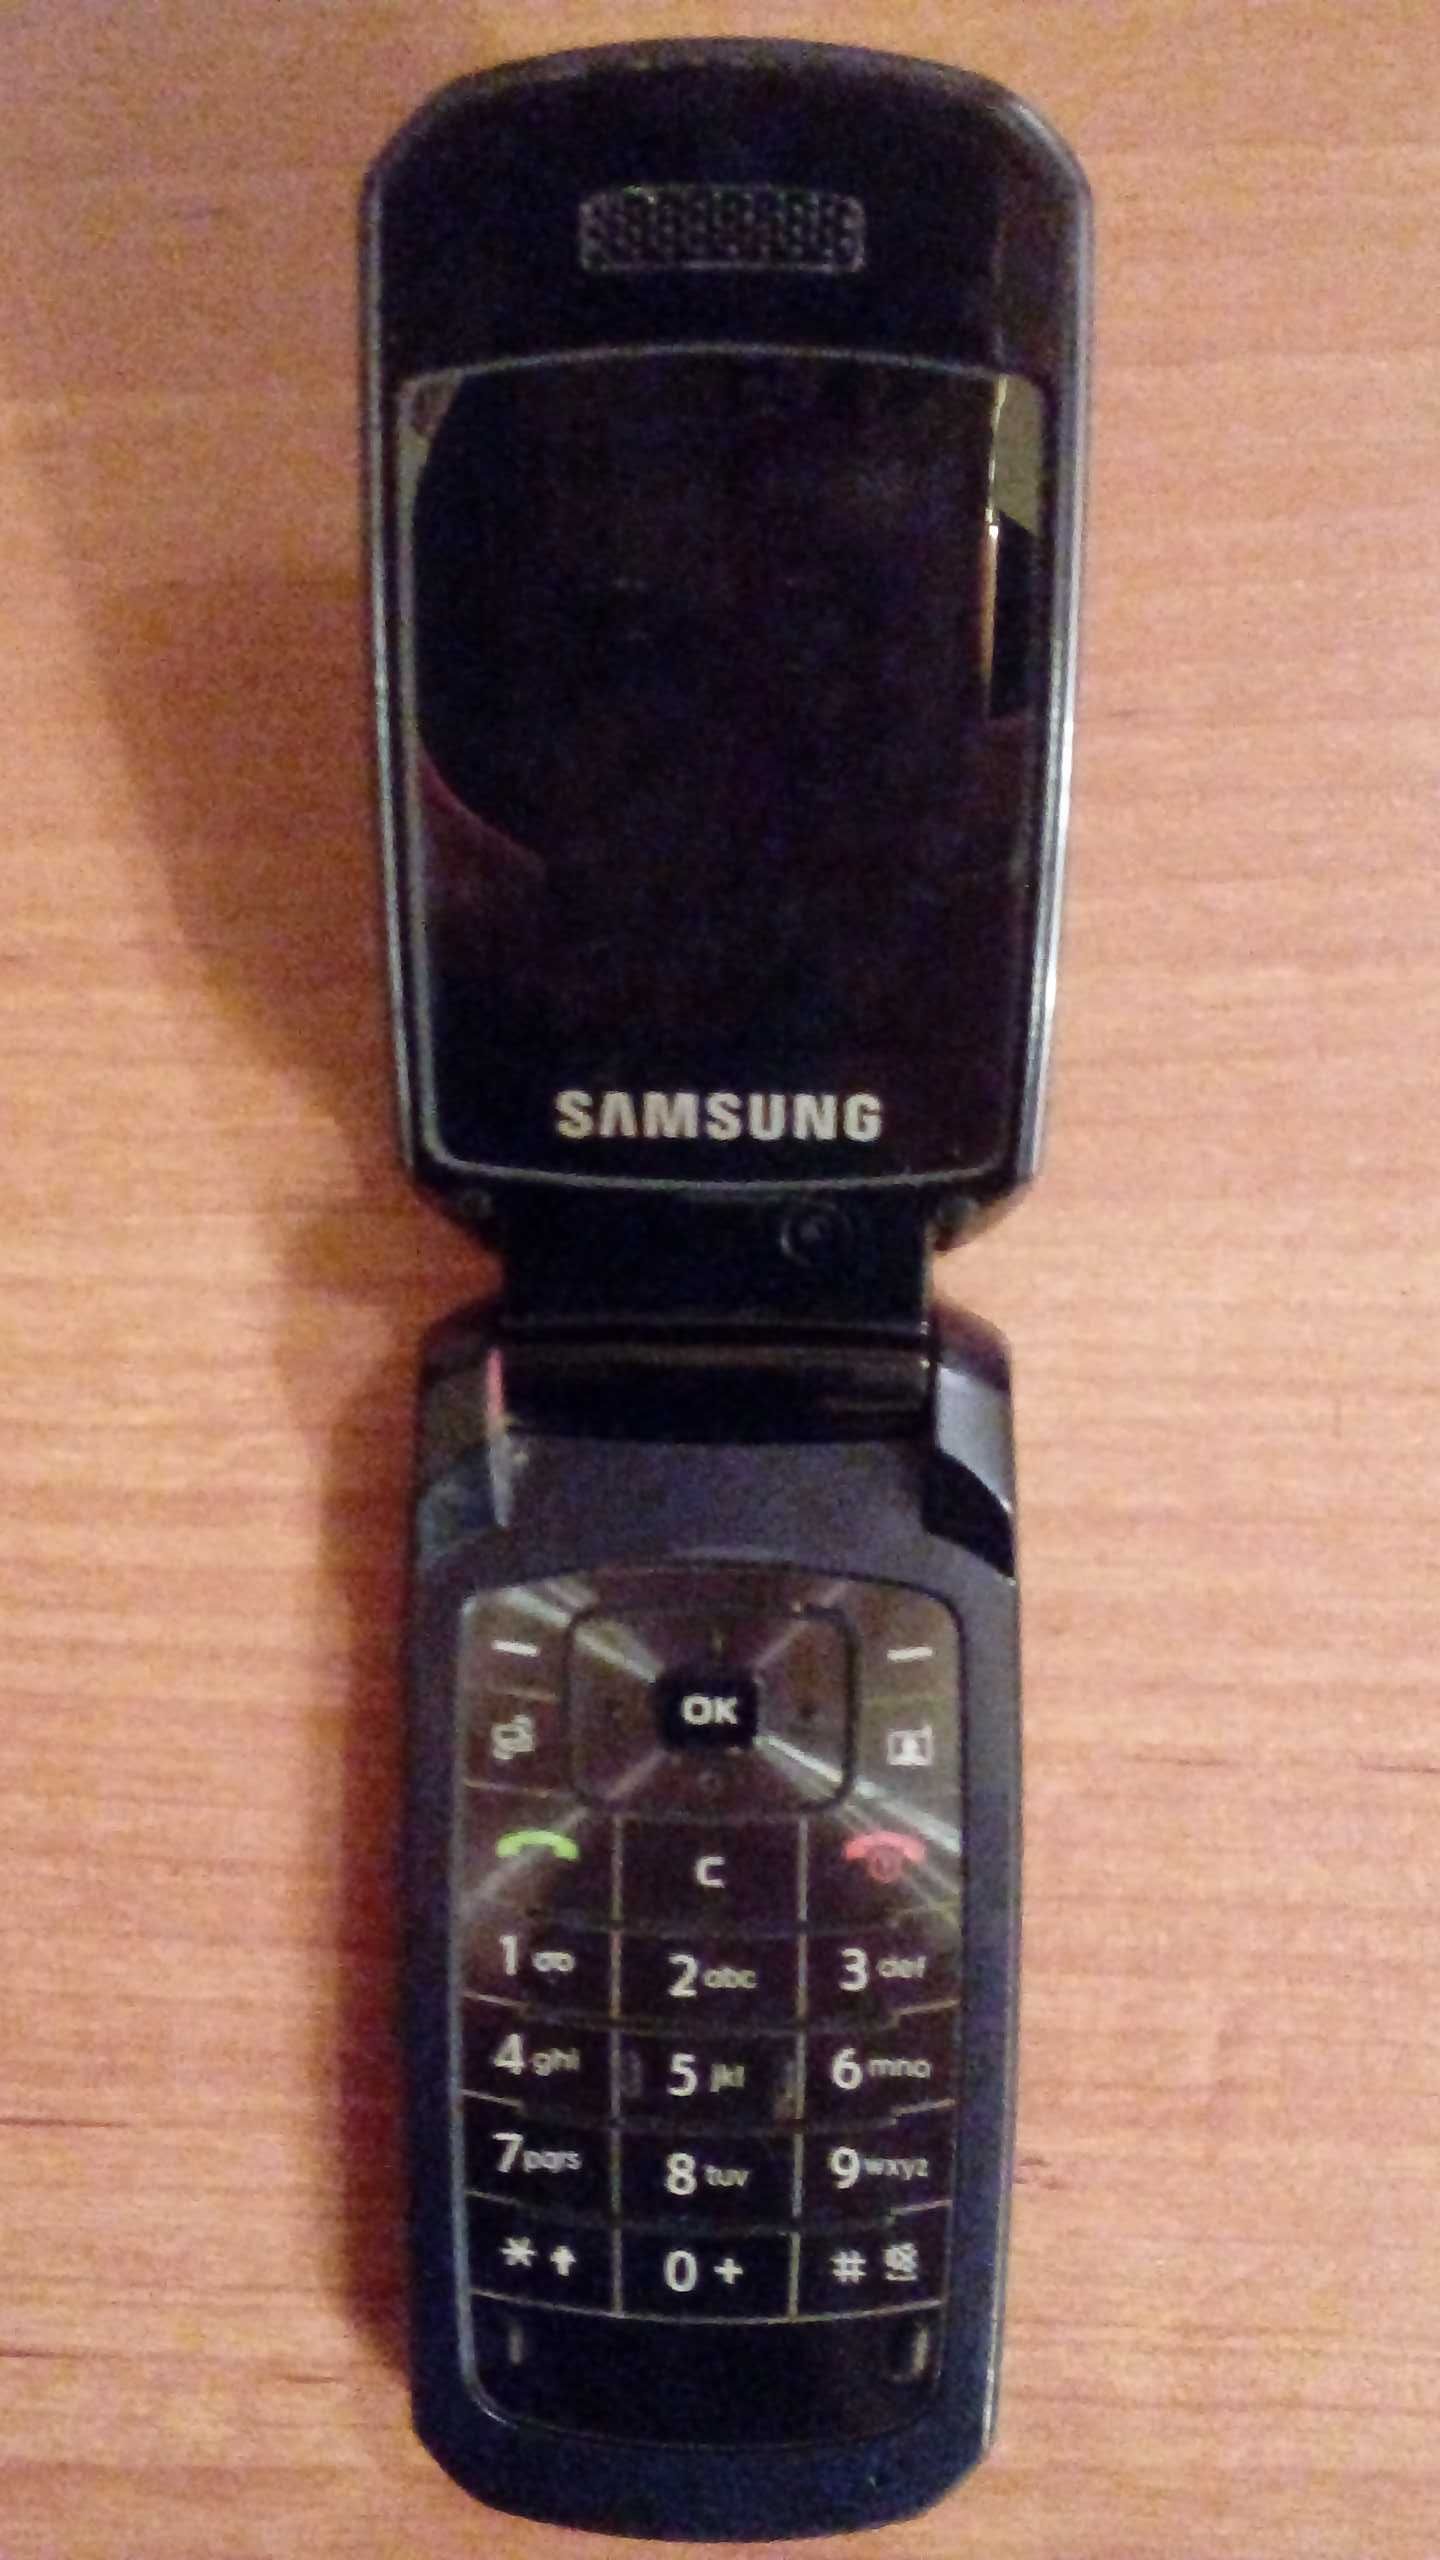 Telefon komórkowy LG D280n i inne telefony